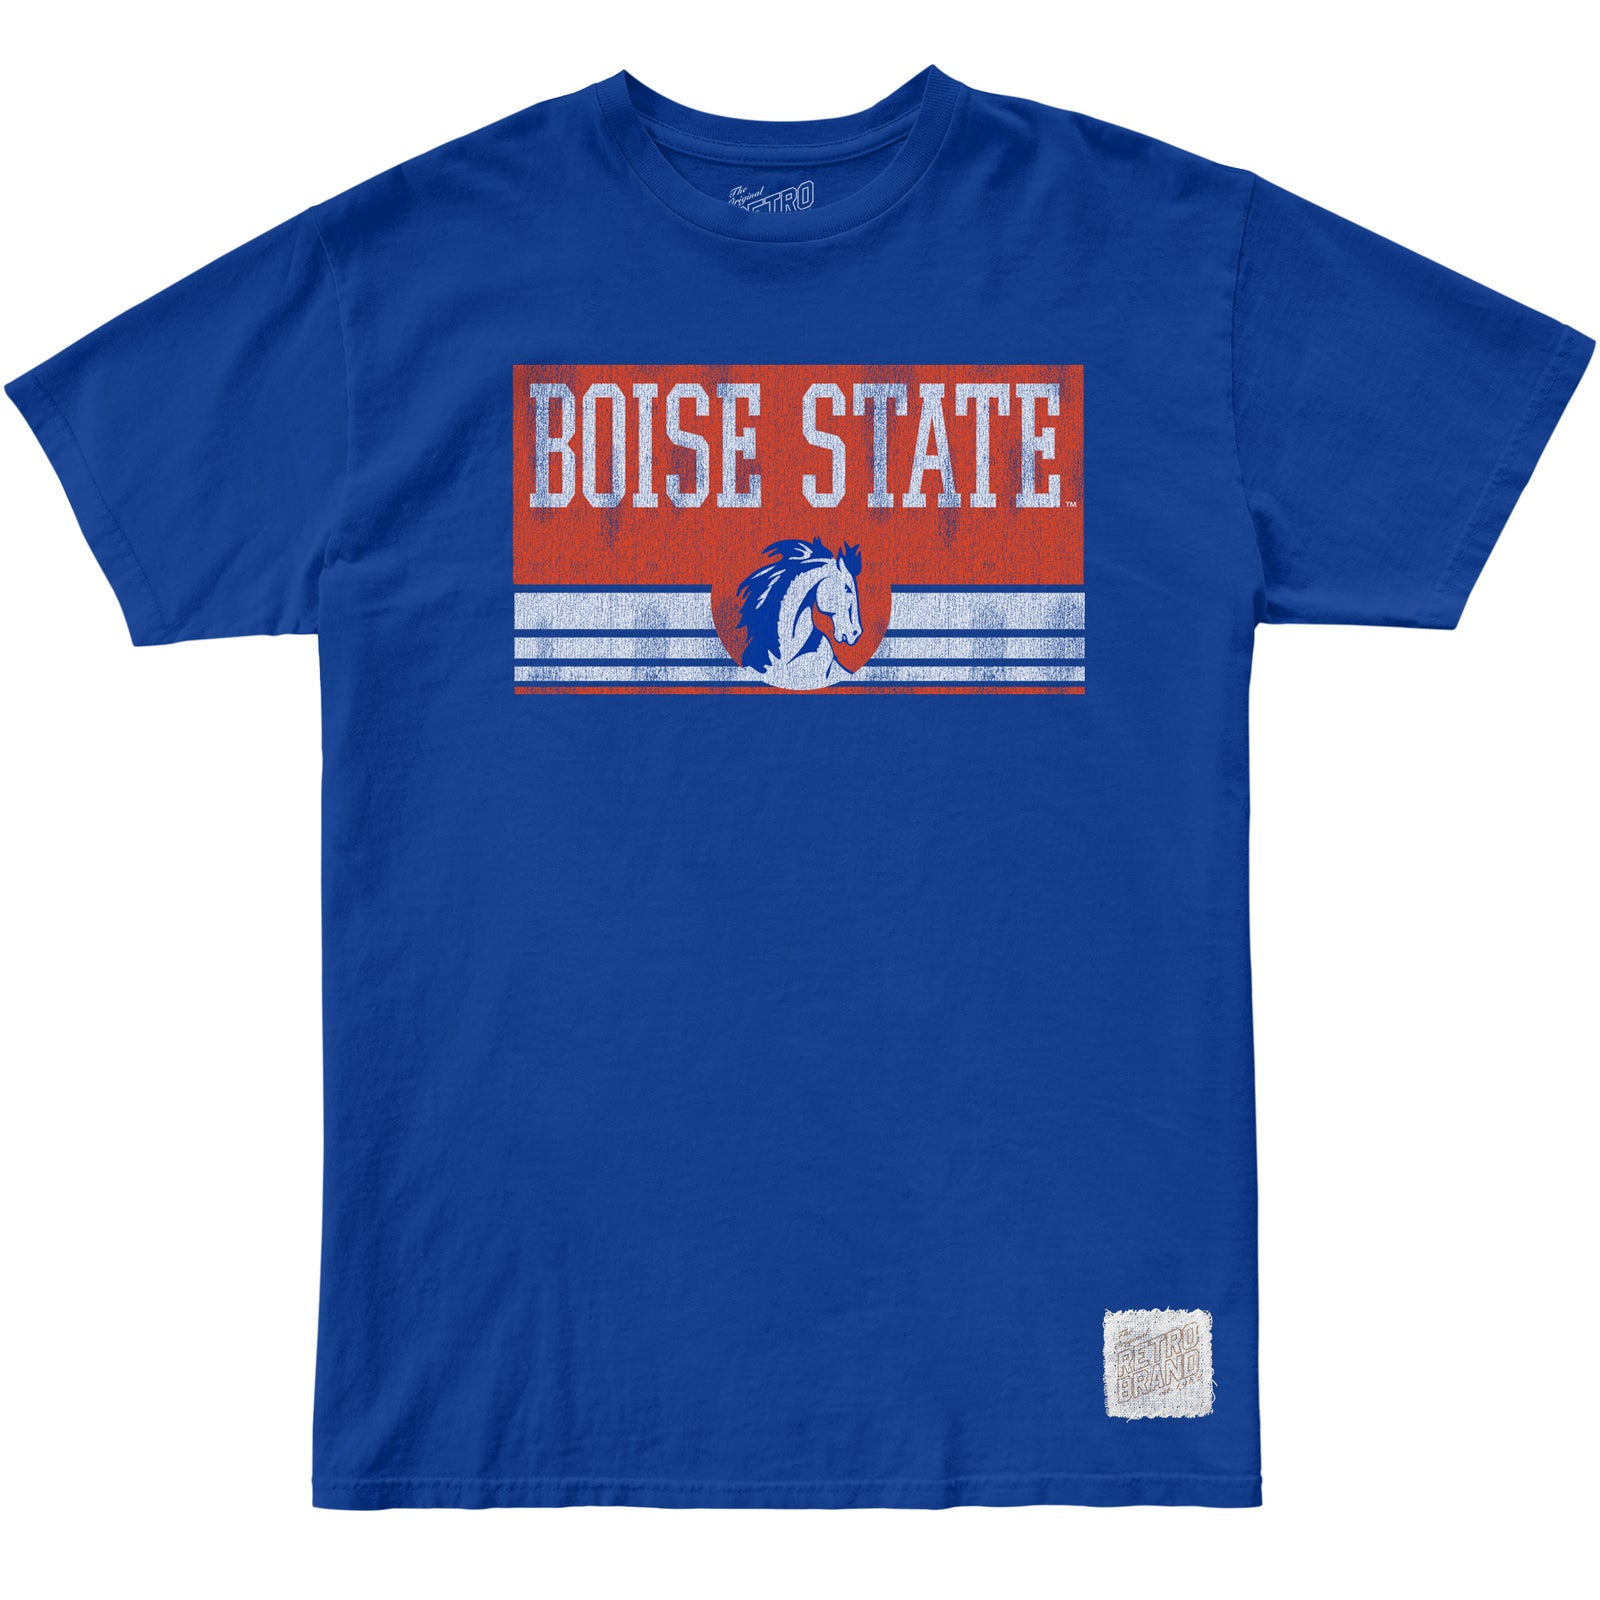 Boise State Broncos 100% Cotton Tee